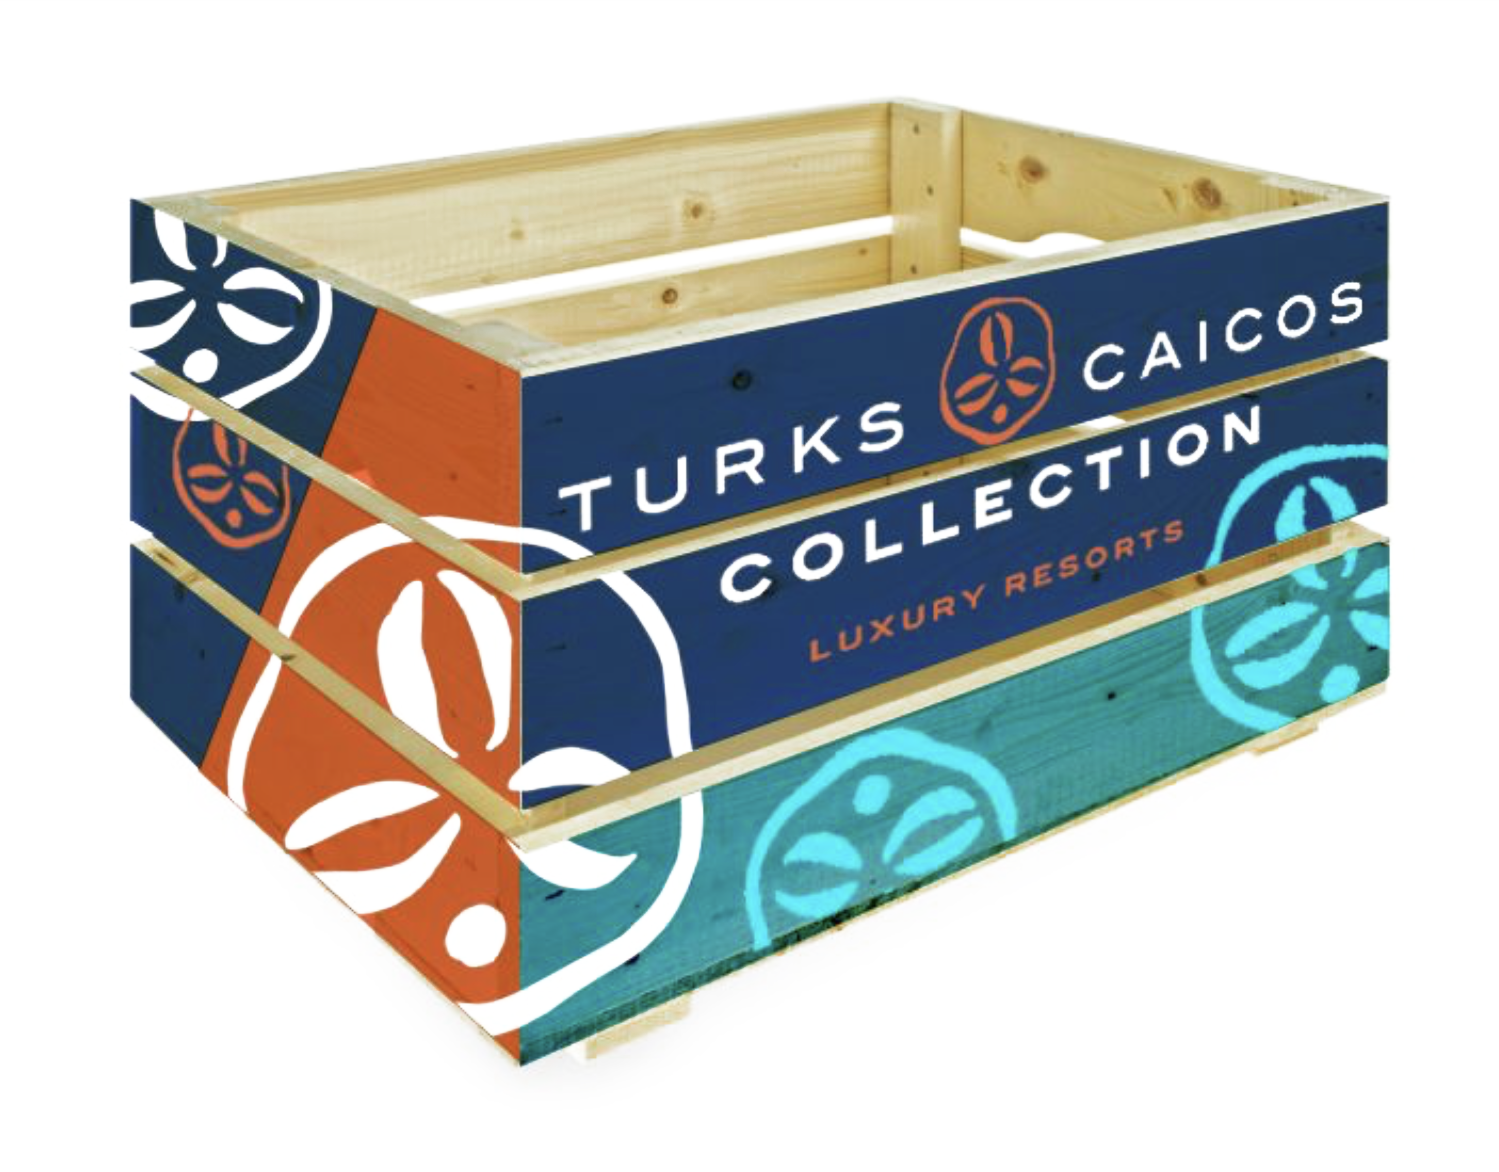 Turks & Caicos Collection